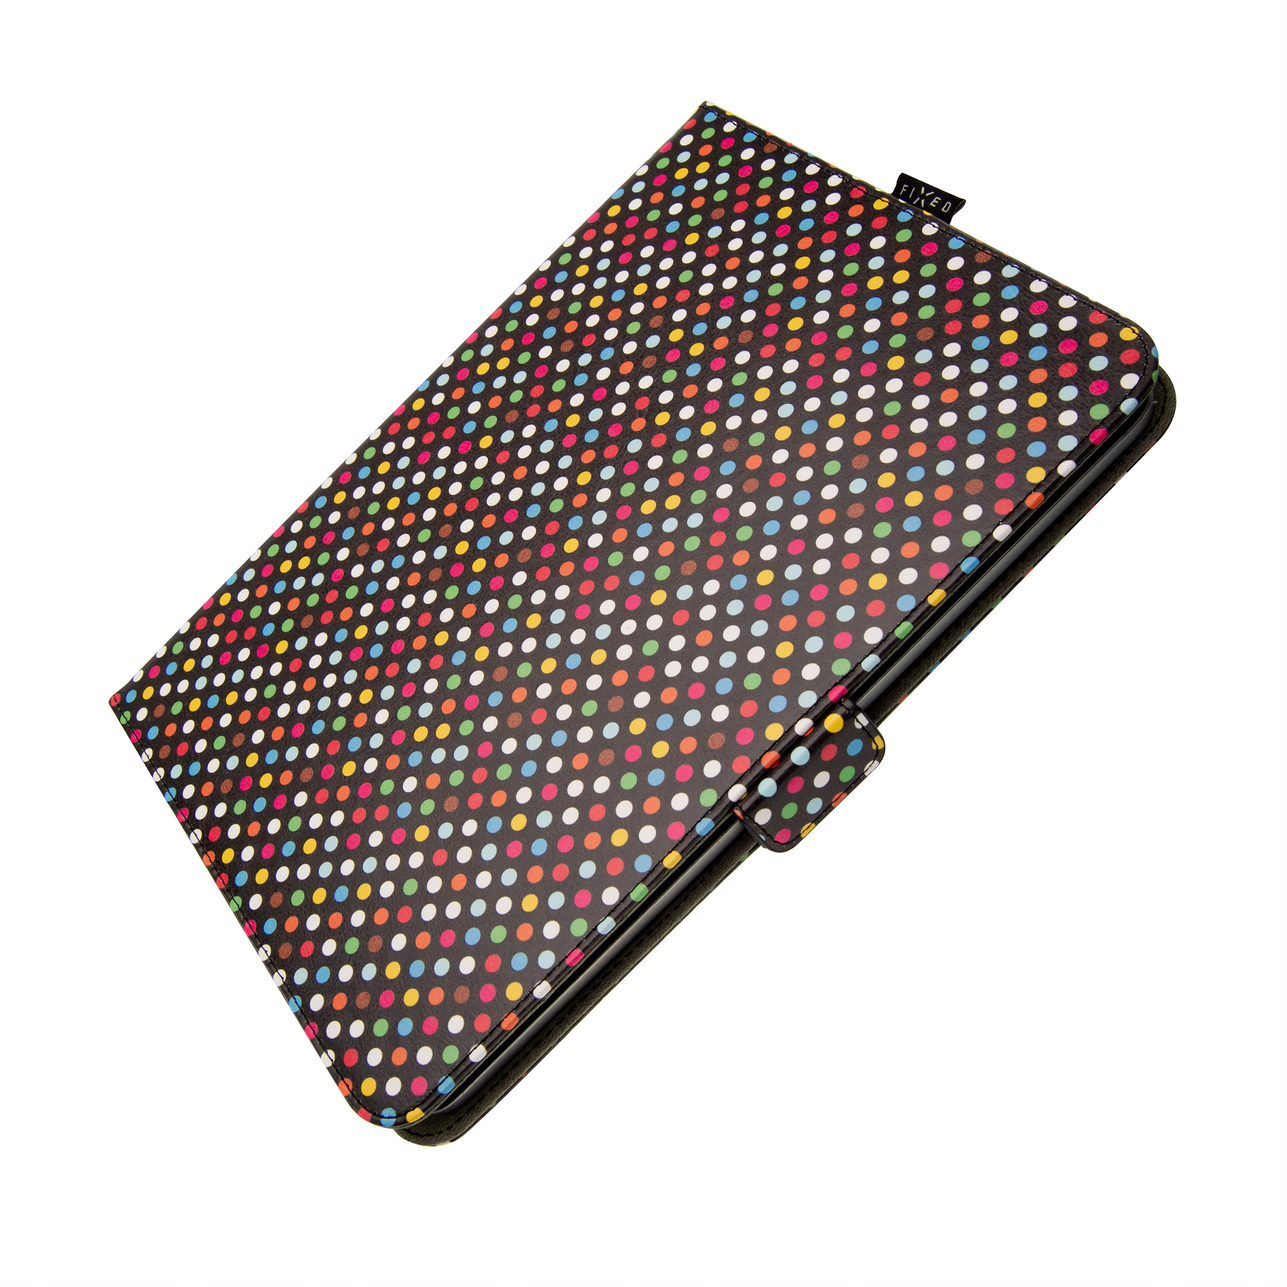 FIXED Novel pouzdro pro 10.1" tablety se stojánkem a kapsou, motiv Rainbow Dots